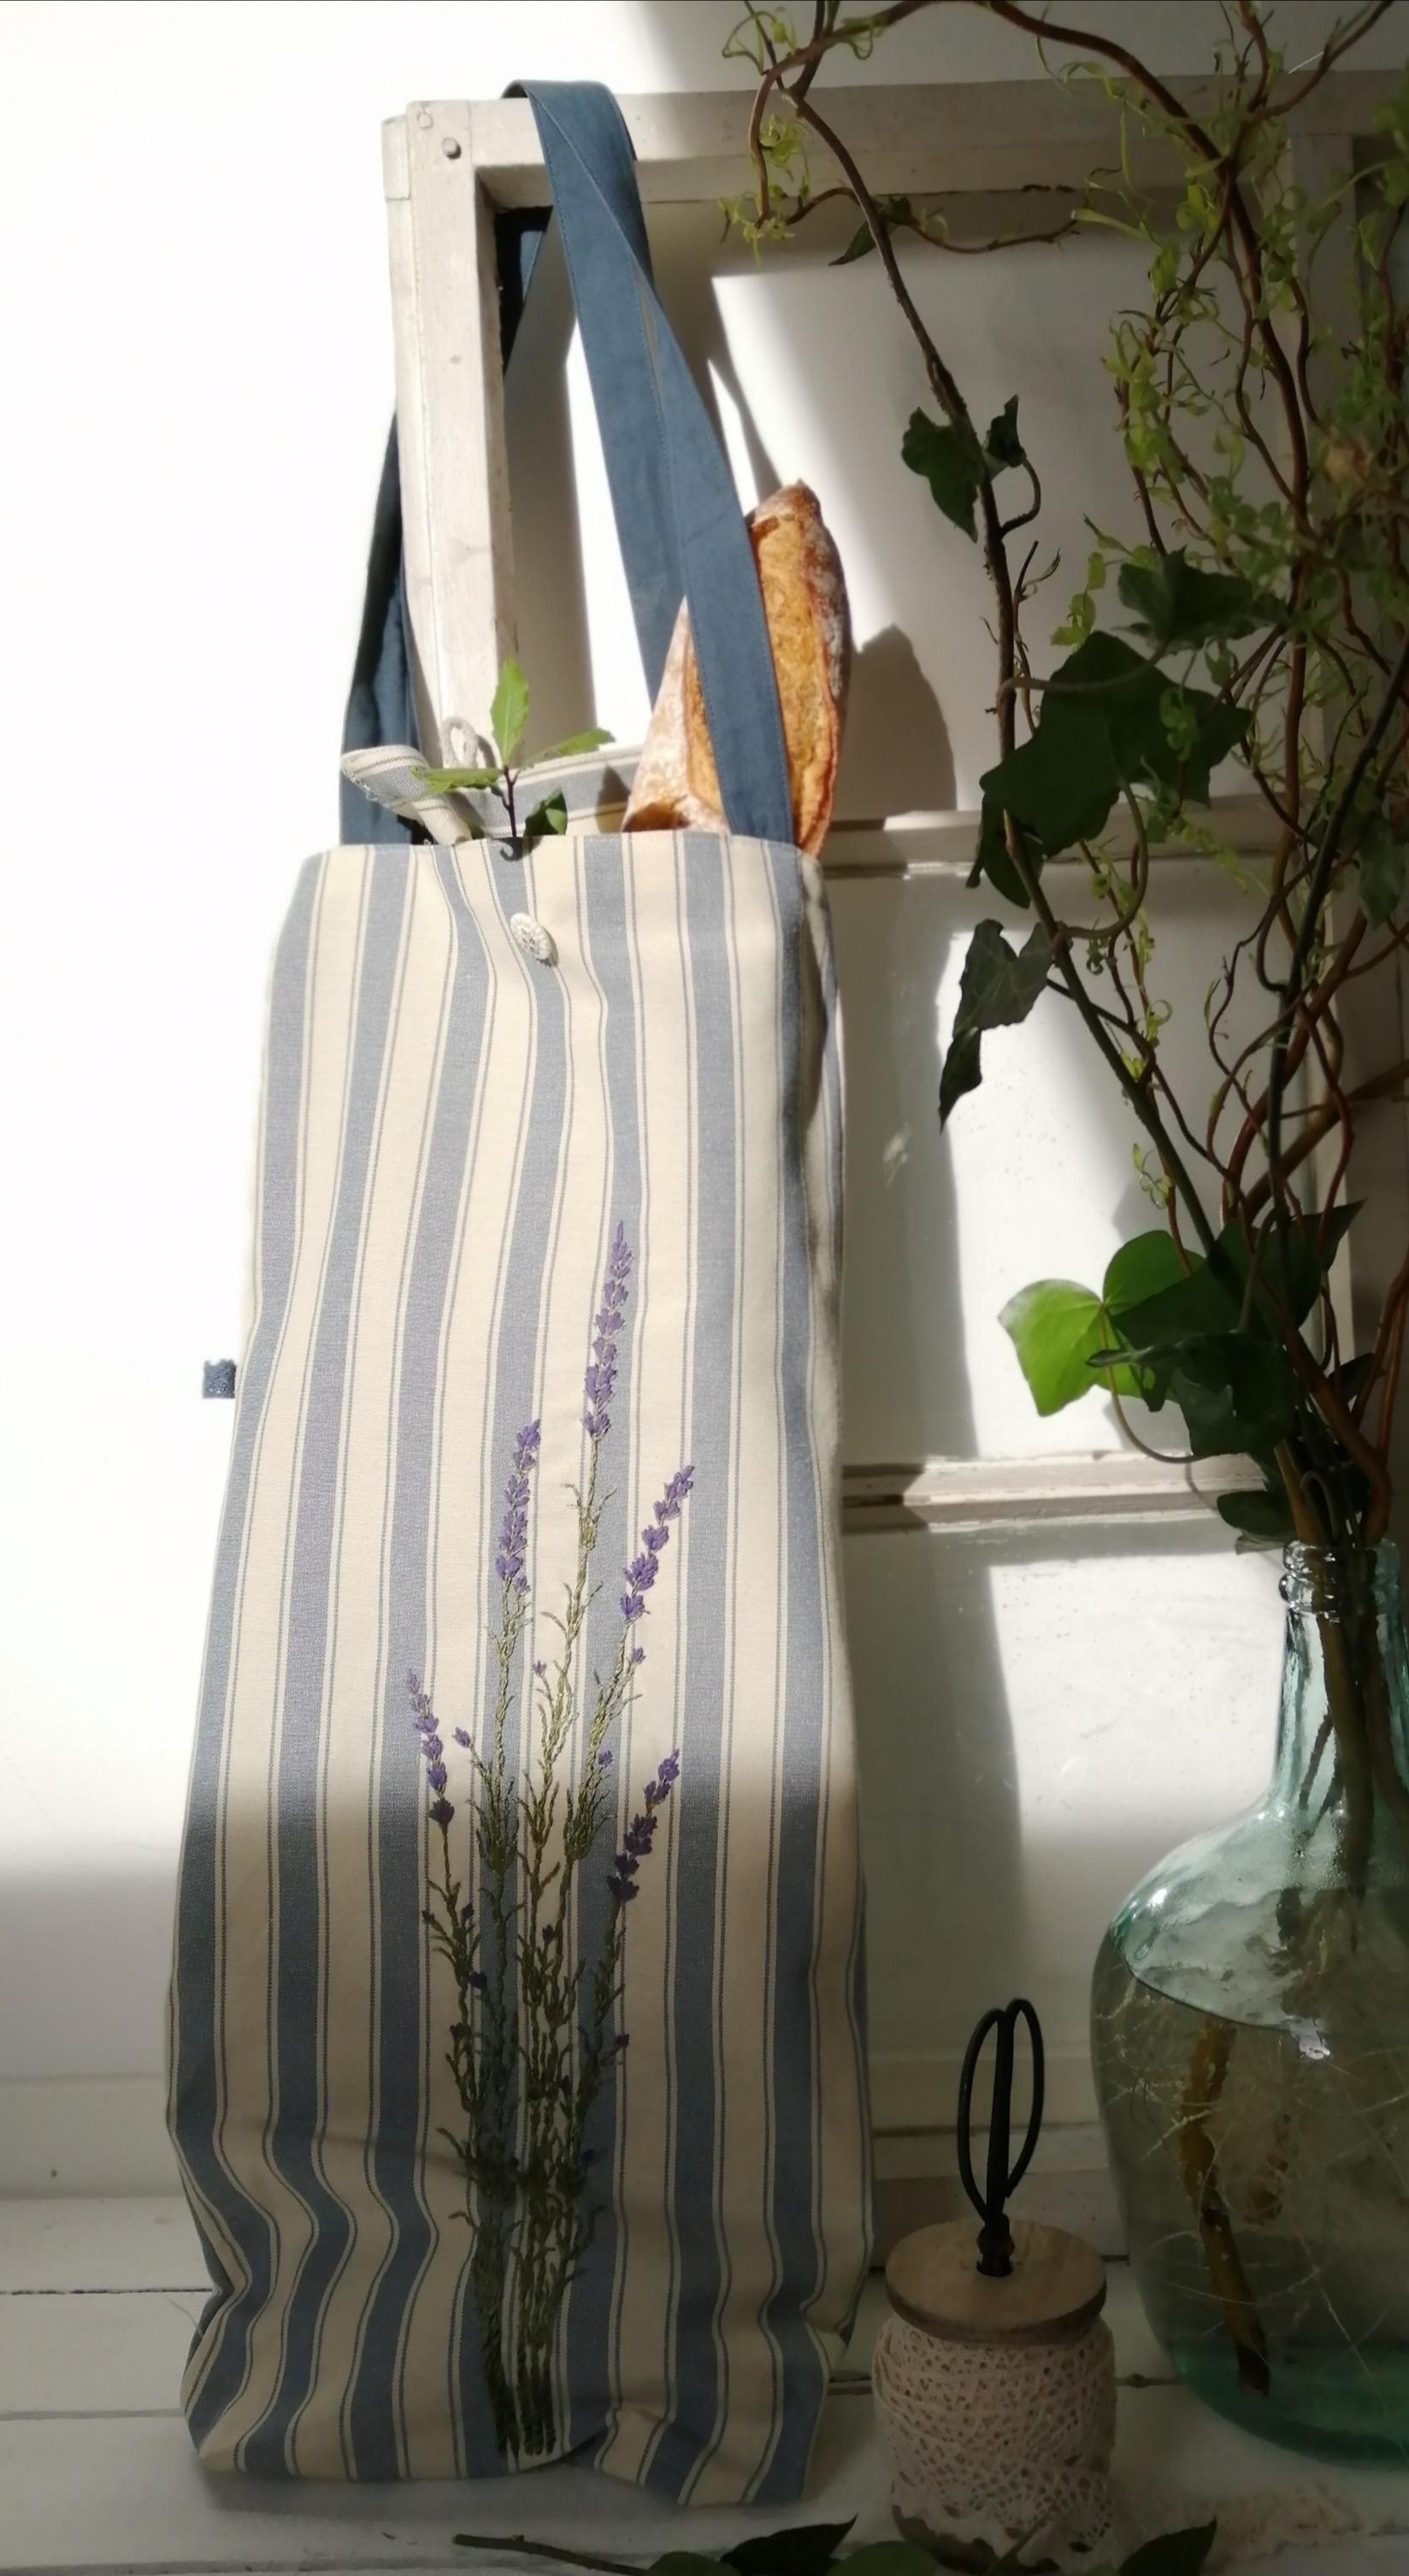 Baguette bag, bestickt mit Lavendel 🌿#countrystyle #embroiderybotanical #baguettebag #sewlove #diy 